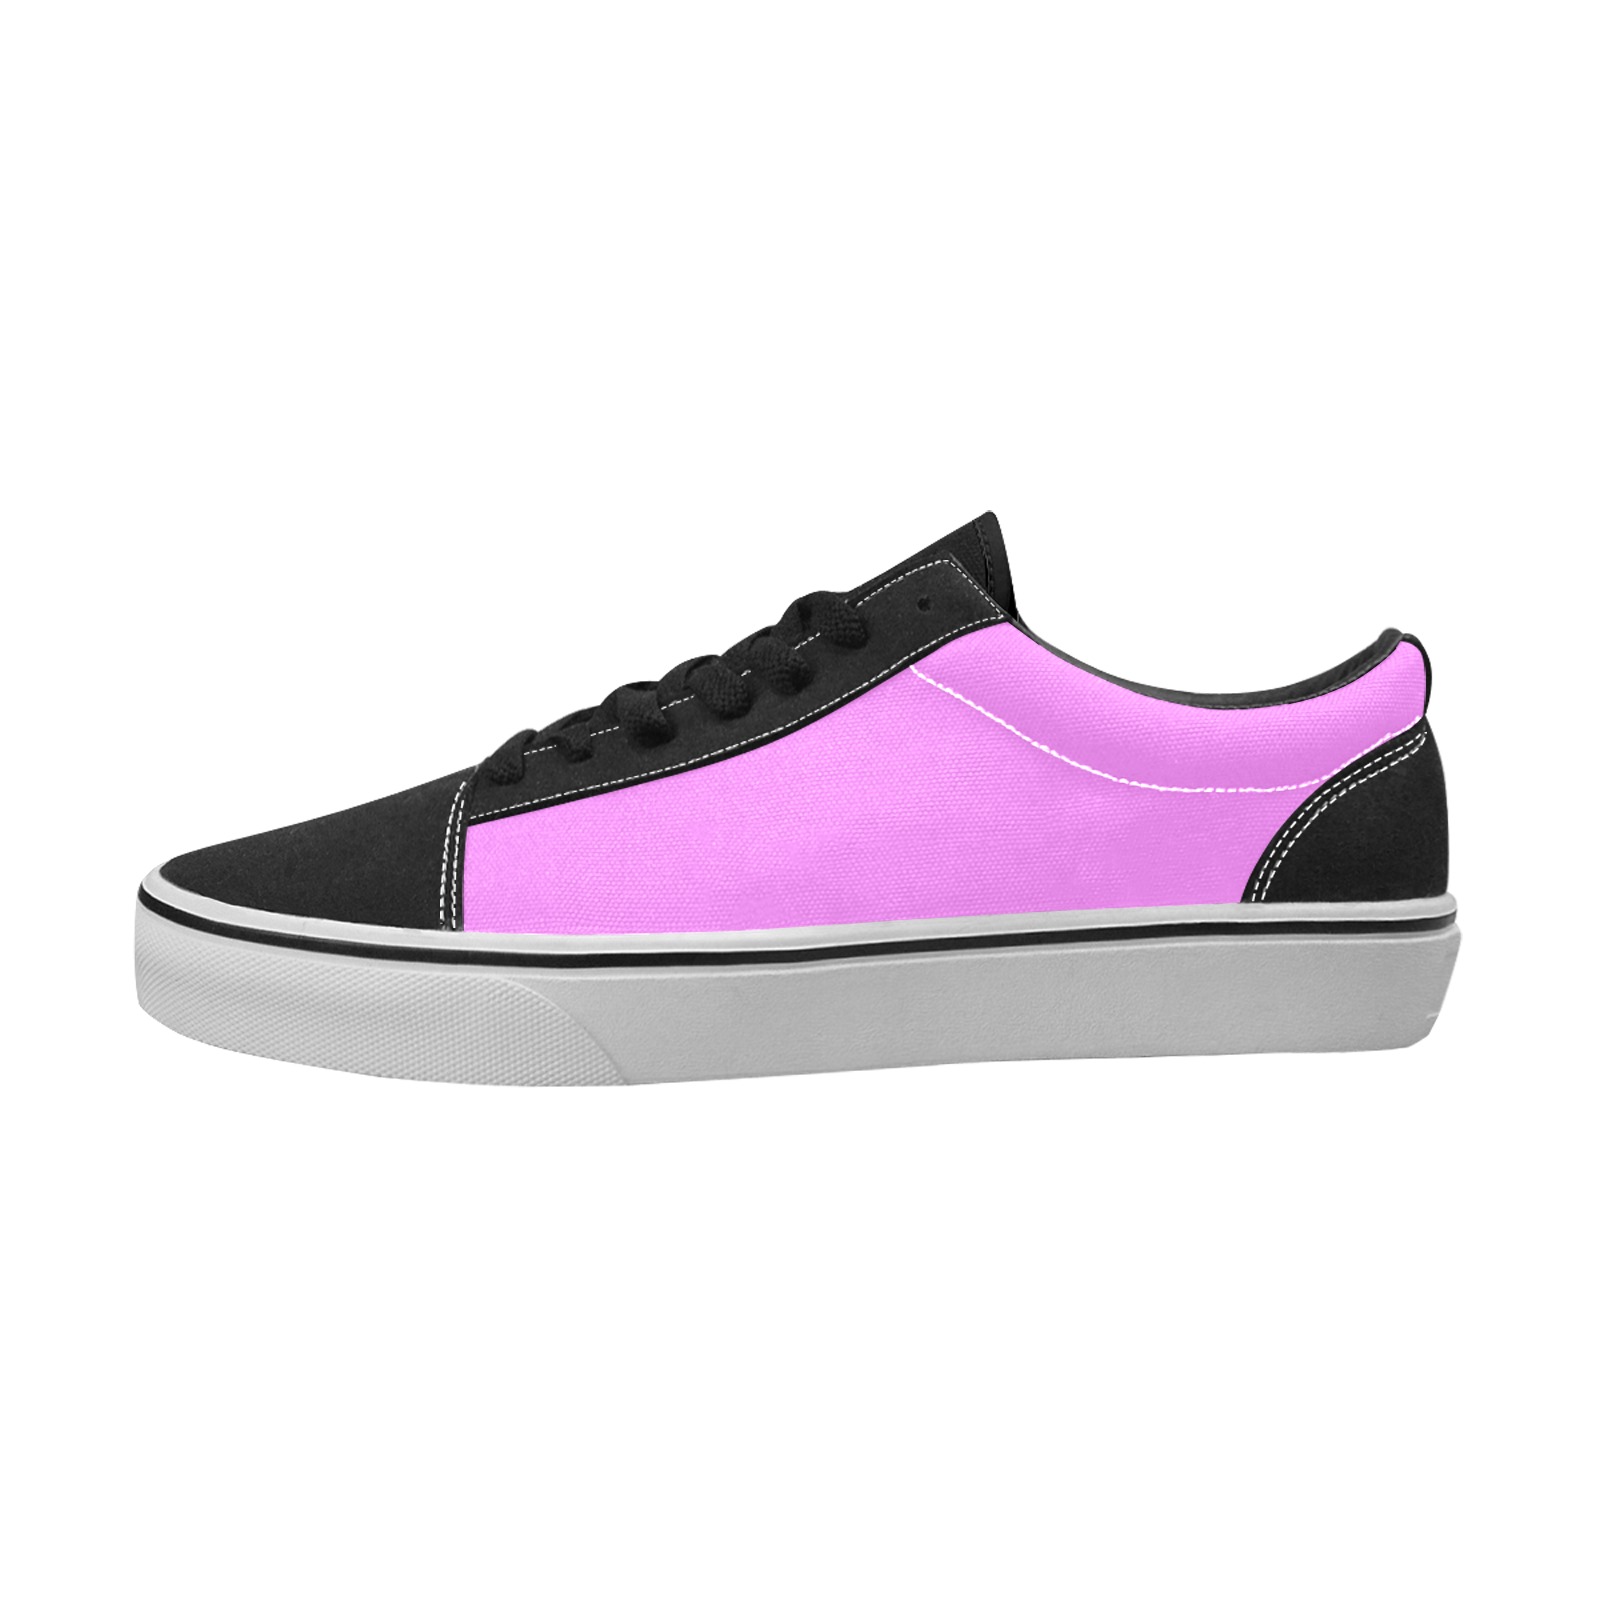 color violet Men's Low Top Skateboarding Shoes (Model E001-2)